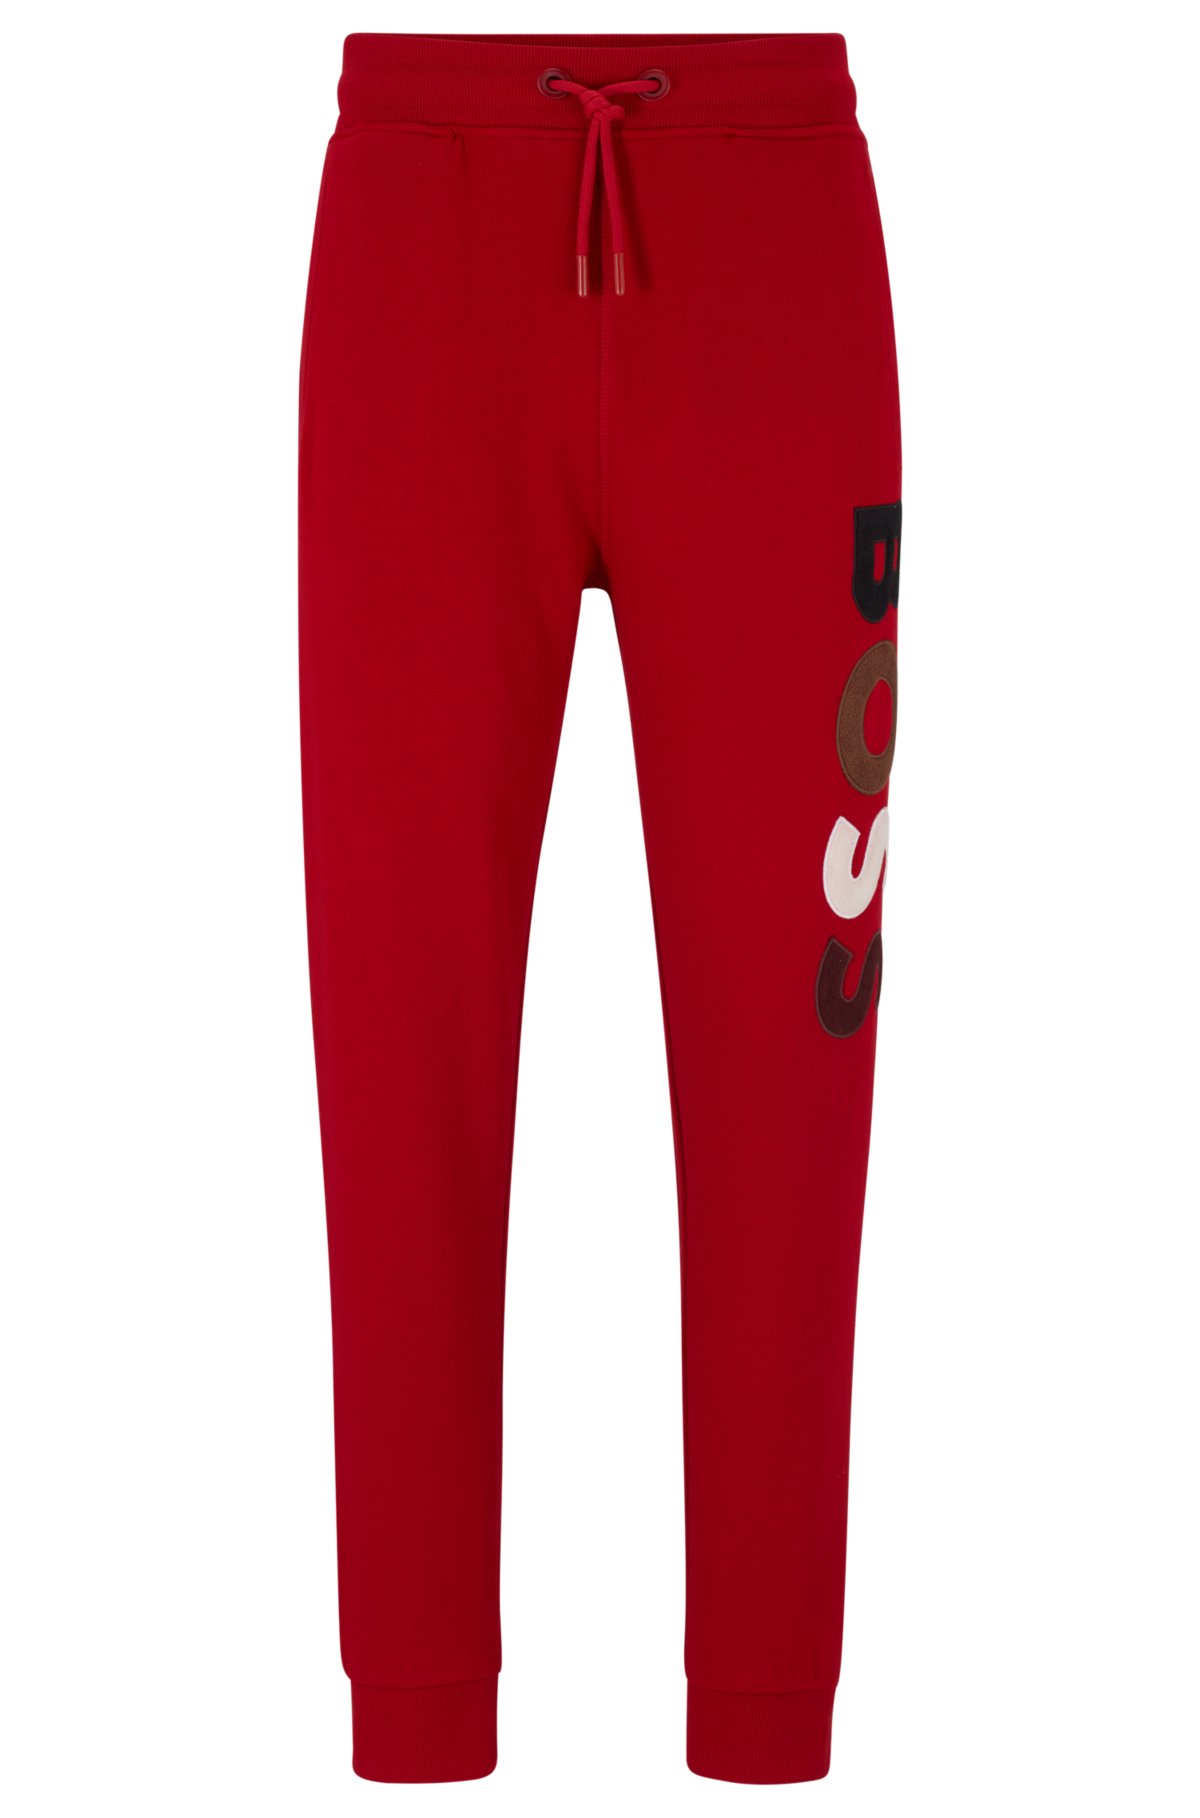 Women 2 Piece Fleece Sweatsuit Casual Hoodie and Jogger Pants Tracksuit  Thermal Loungwear Warm Soft Pajamas Set